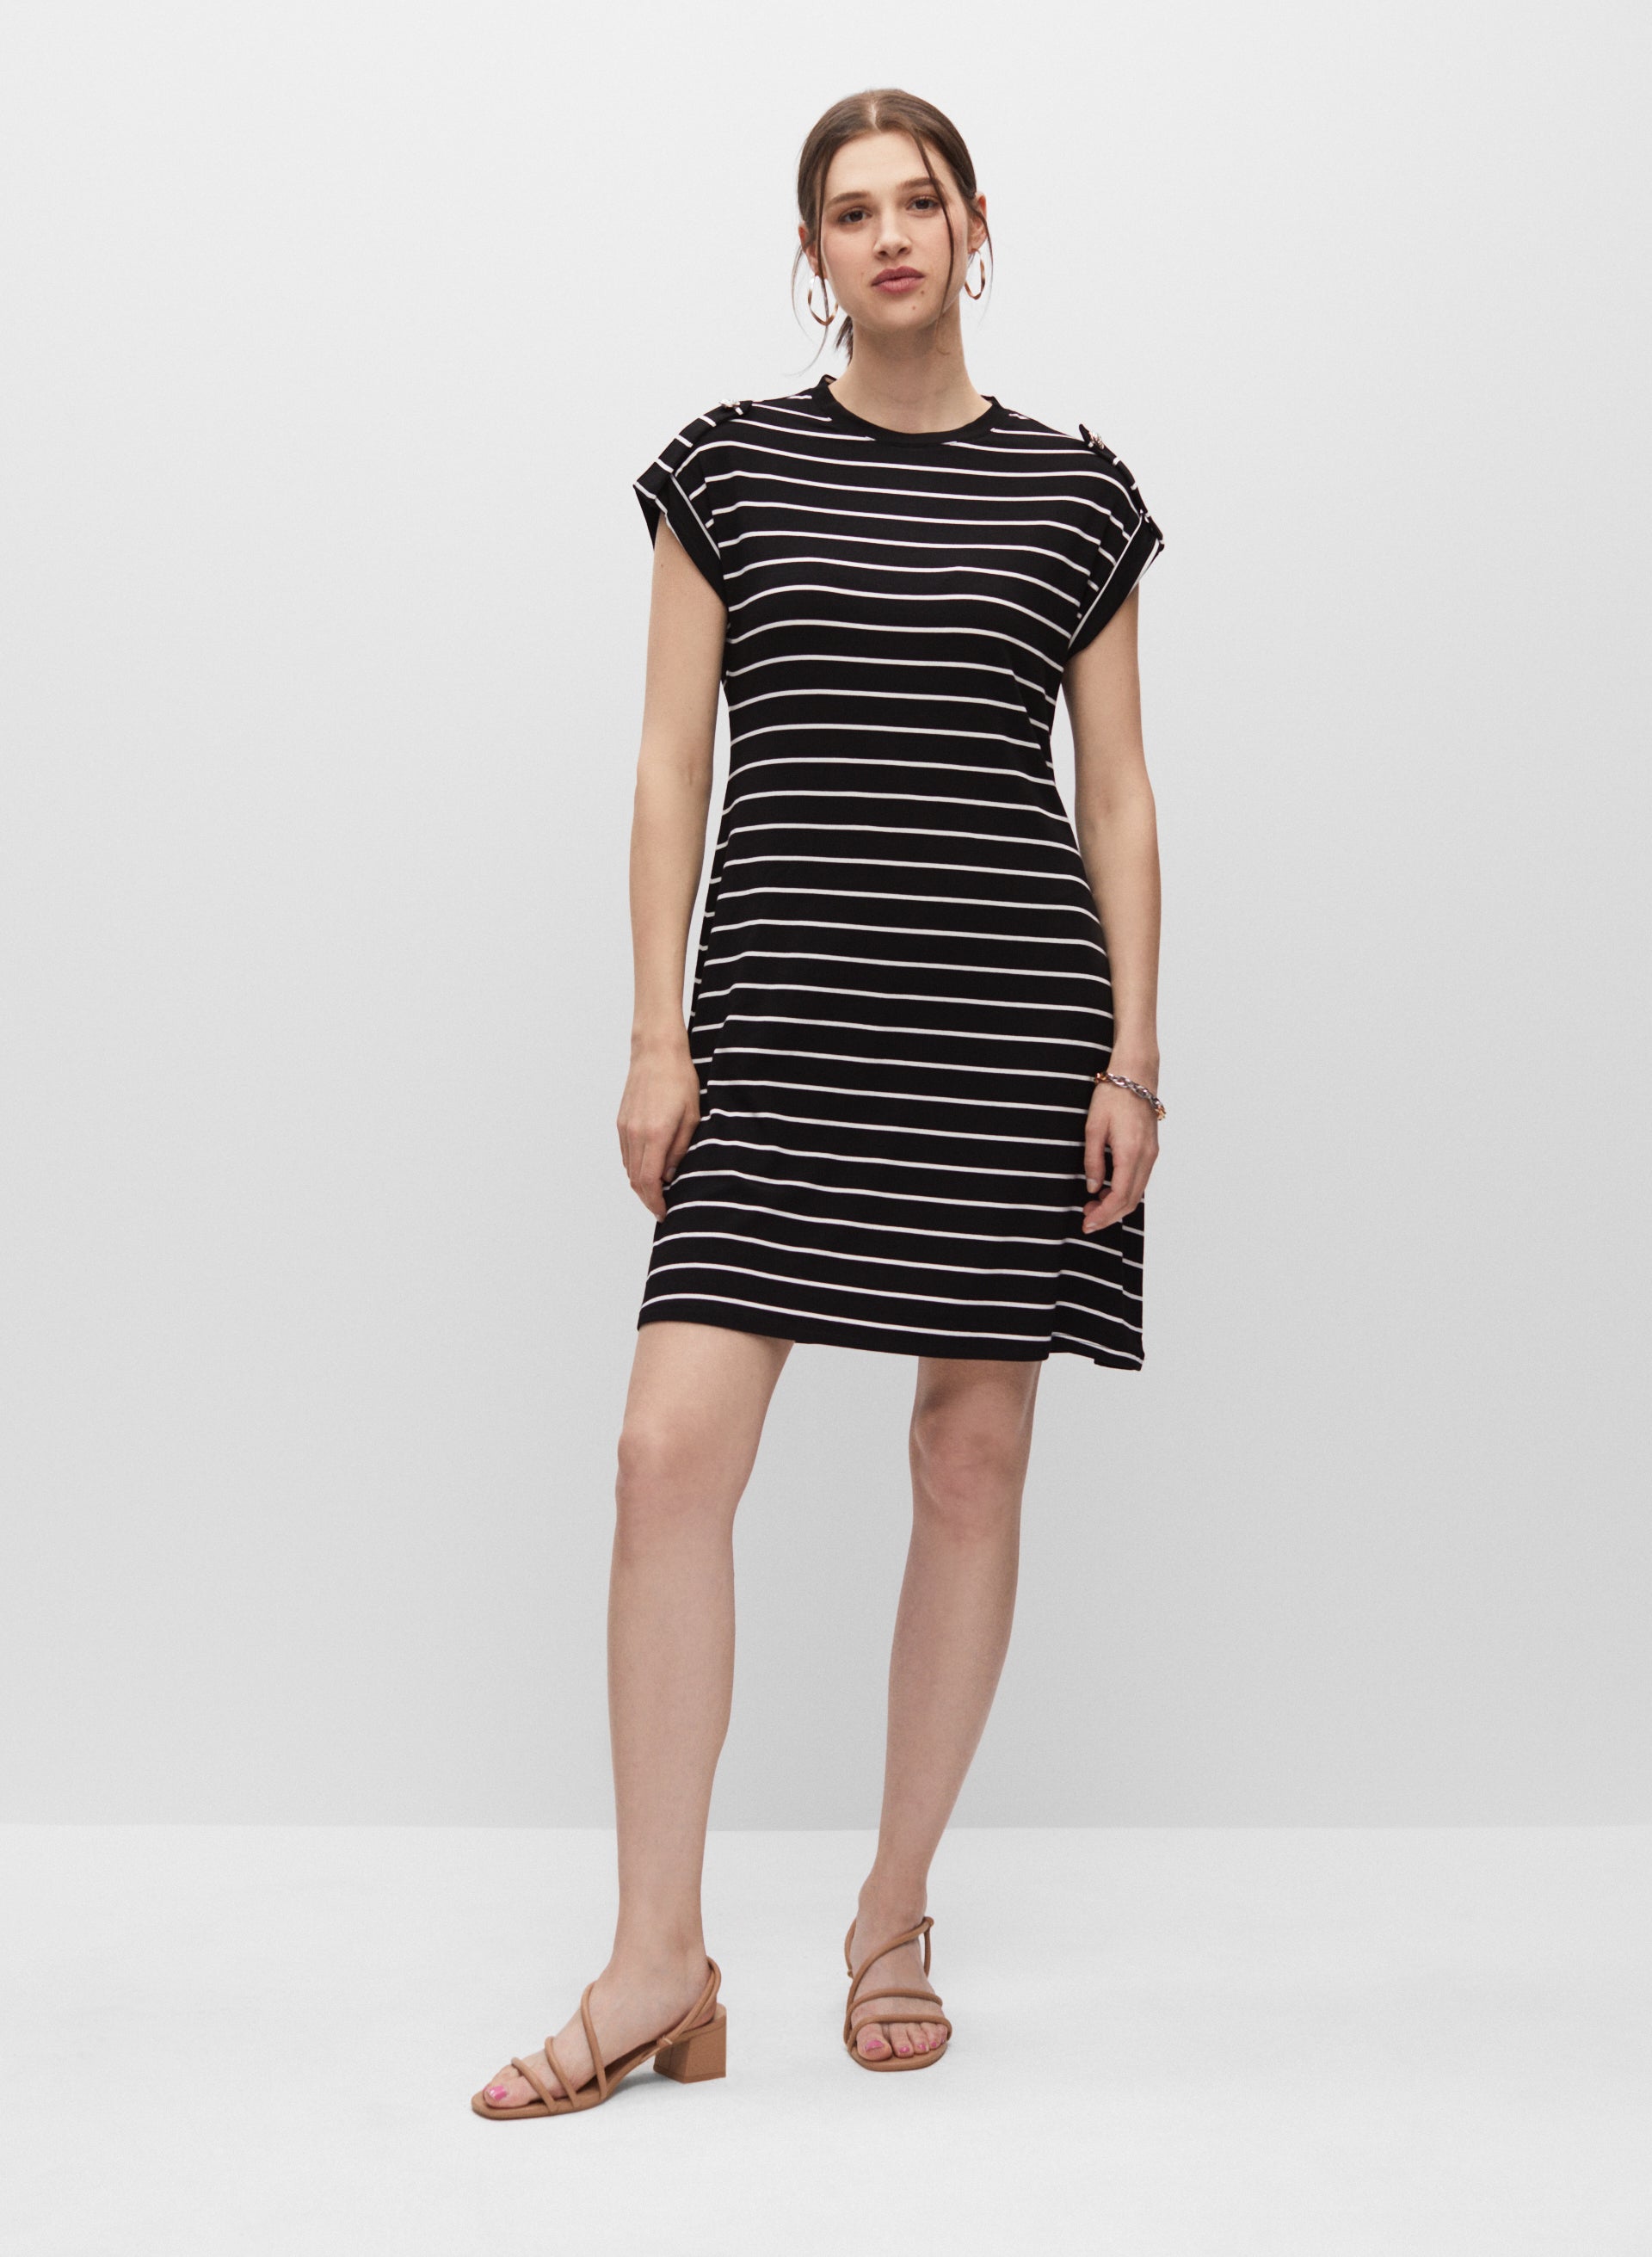 Stripe Print T-Shirt Dress